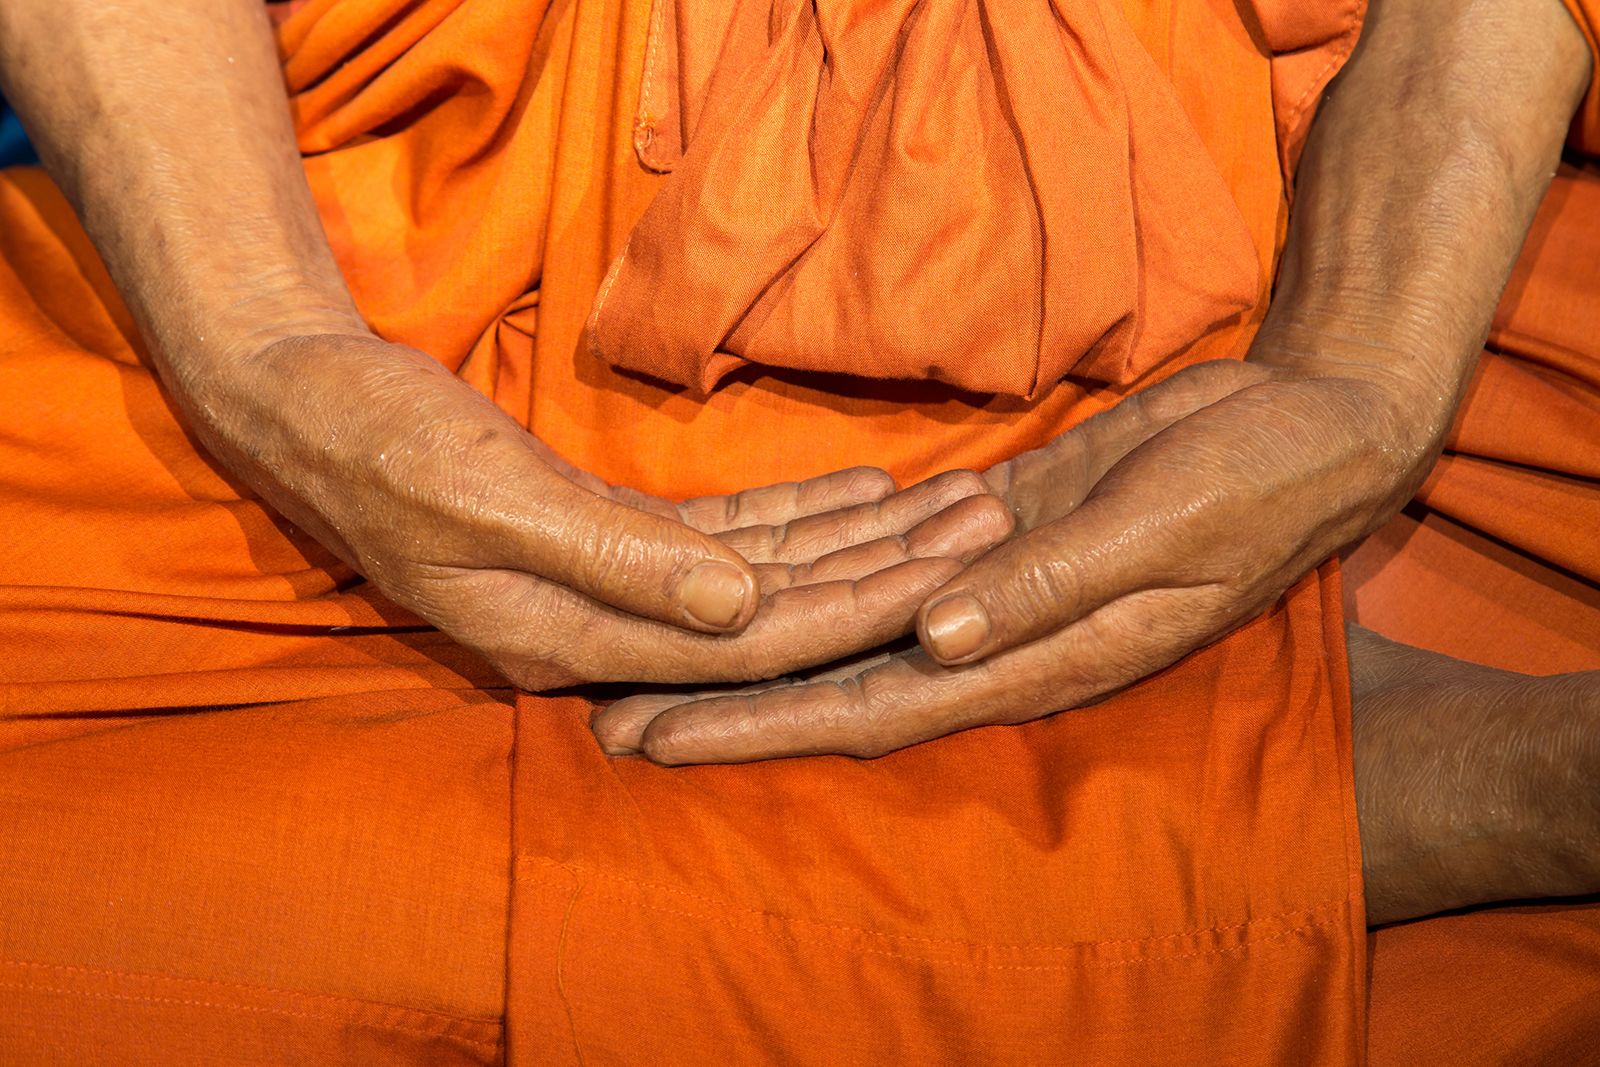 buddhist monk meditation techniques